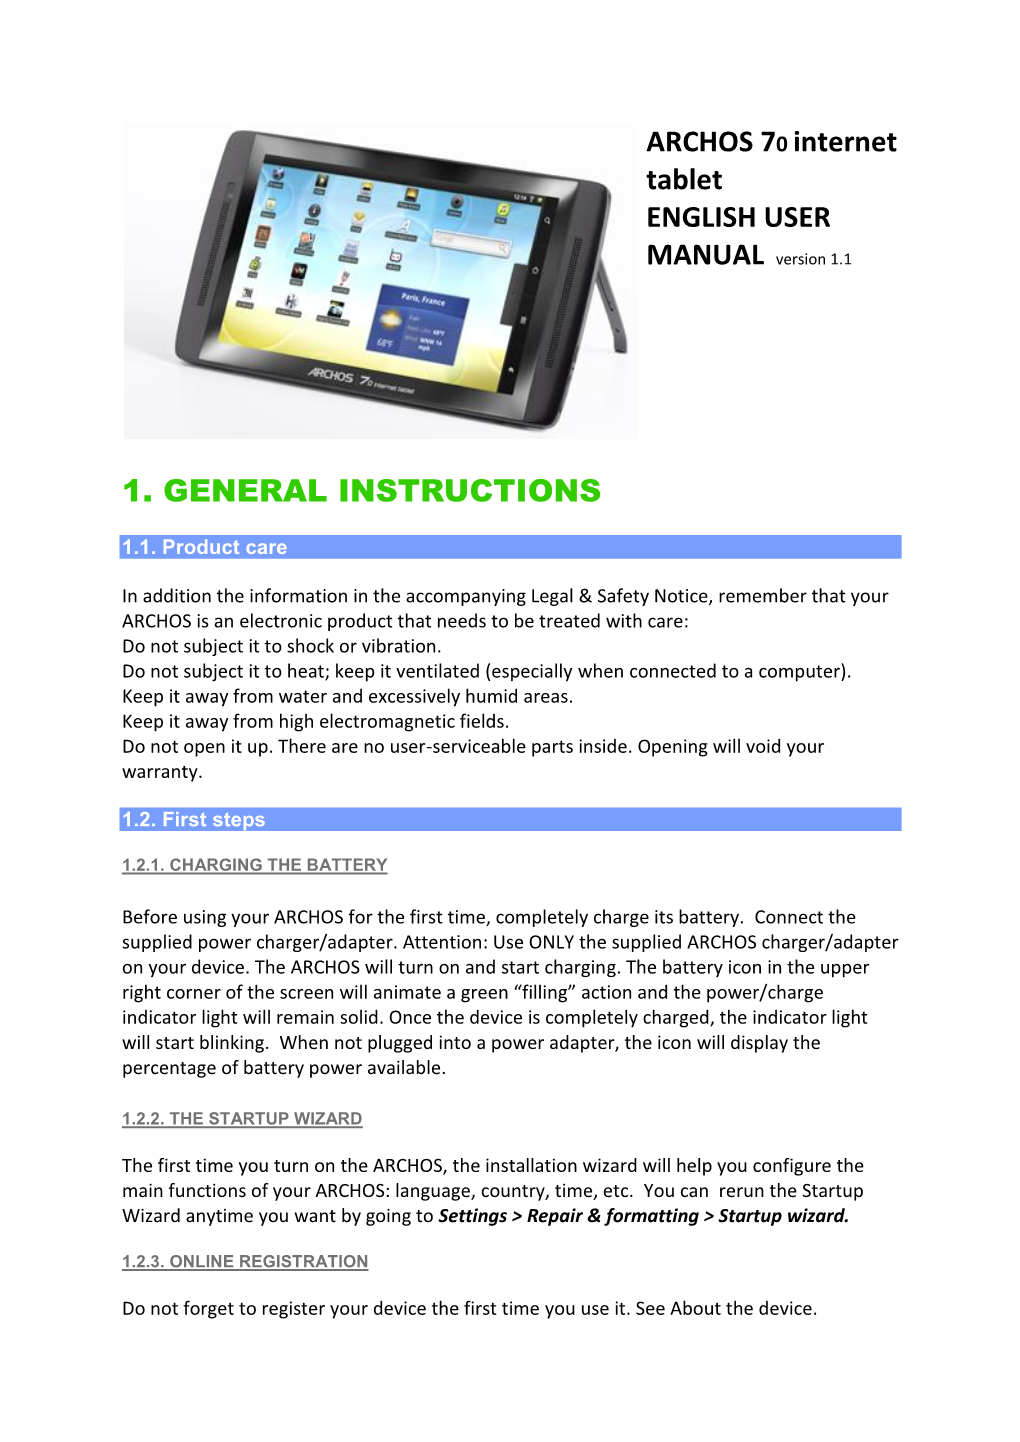 ARCHOS 70 Internet Tablet ENGLISH USER 1. GENERAL INSTRUCTIONS